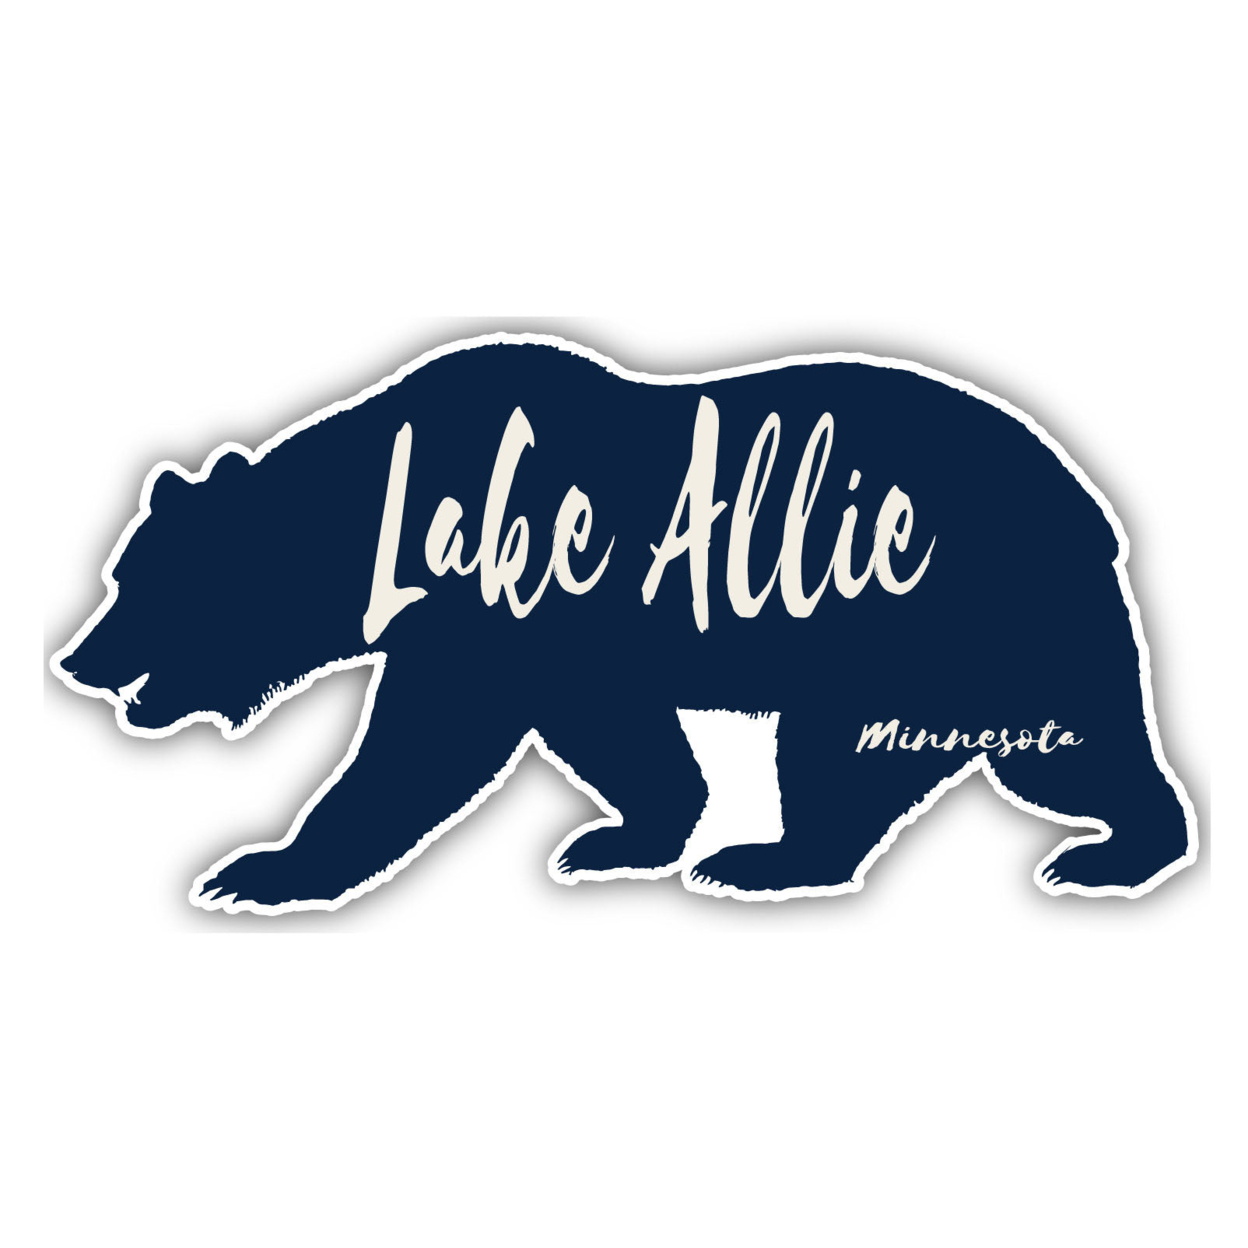 Lake Tahoe California Souvenir Decorative Stickers (Choose Theme And Size) - 2-Inch, Bear